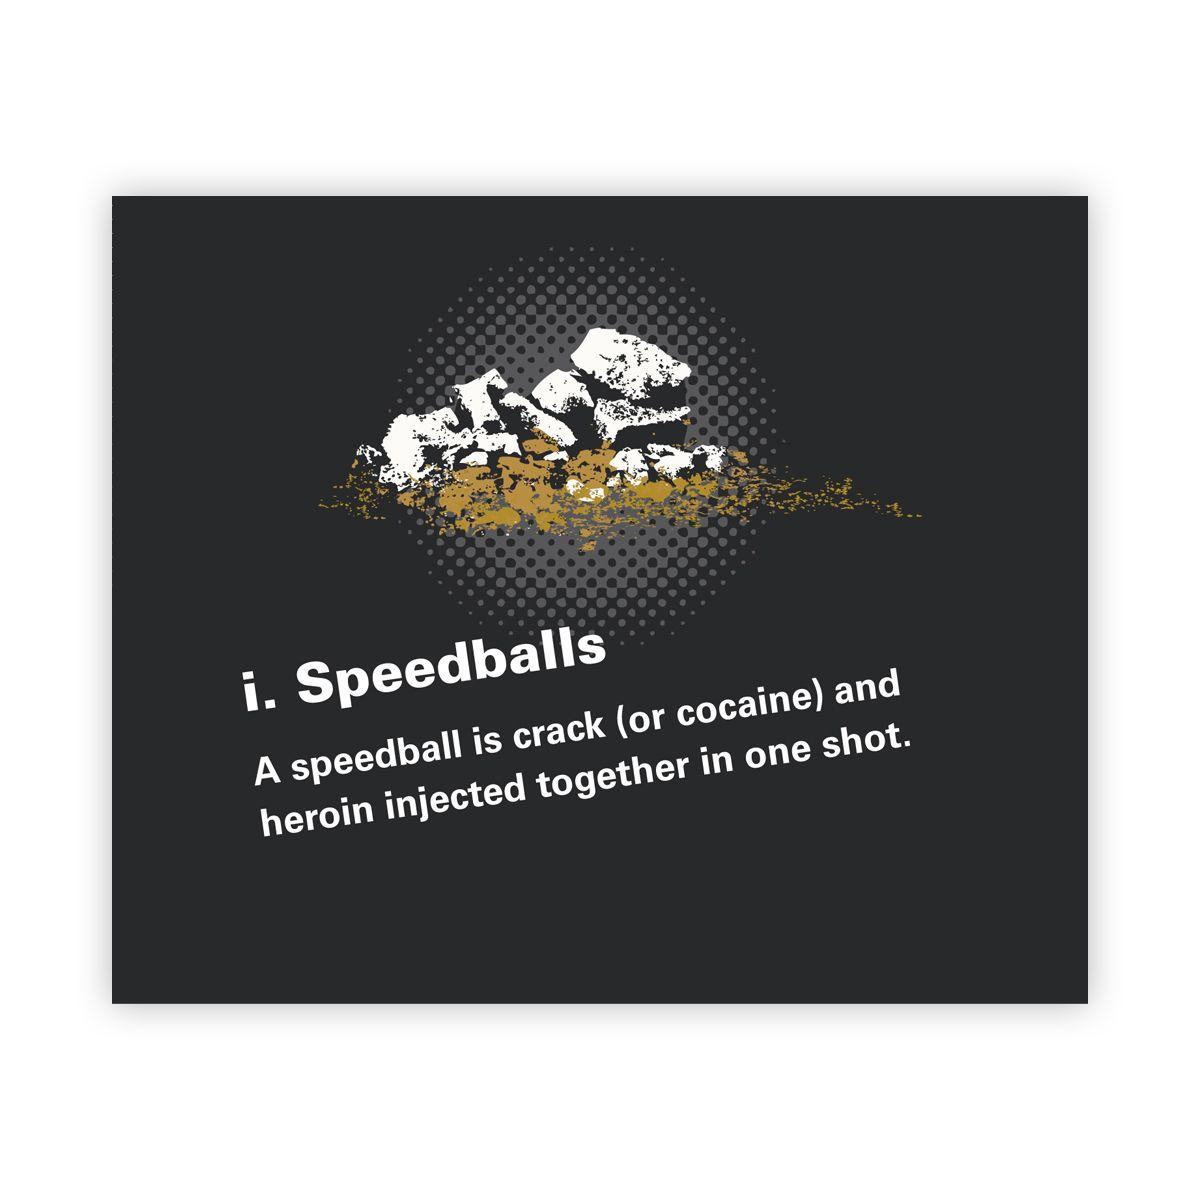 Speedball Logo - Speedballs heroin and cocaine